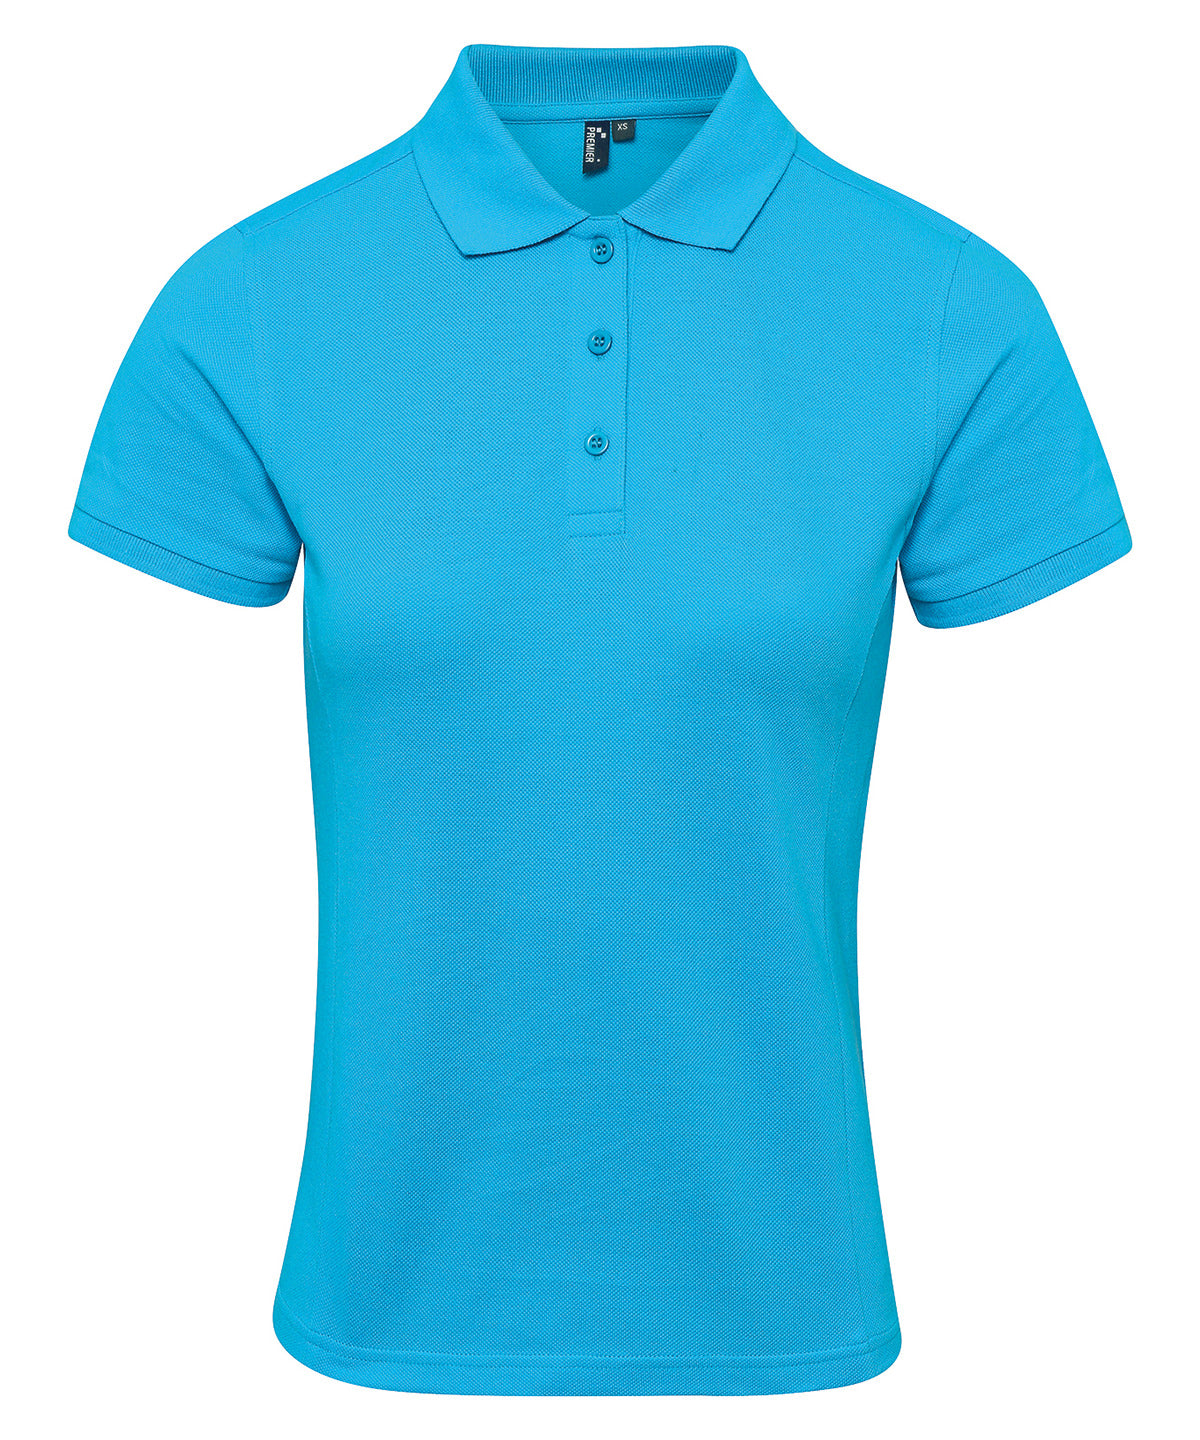 Personalised Polo Shirts - Bottle Premier Women's Coolchecker® plus piqué polo